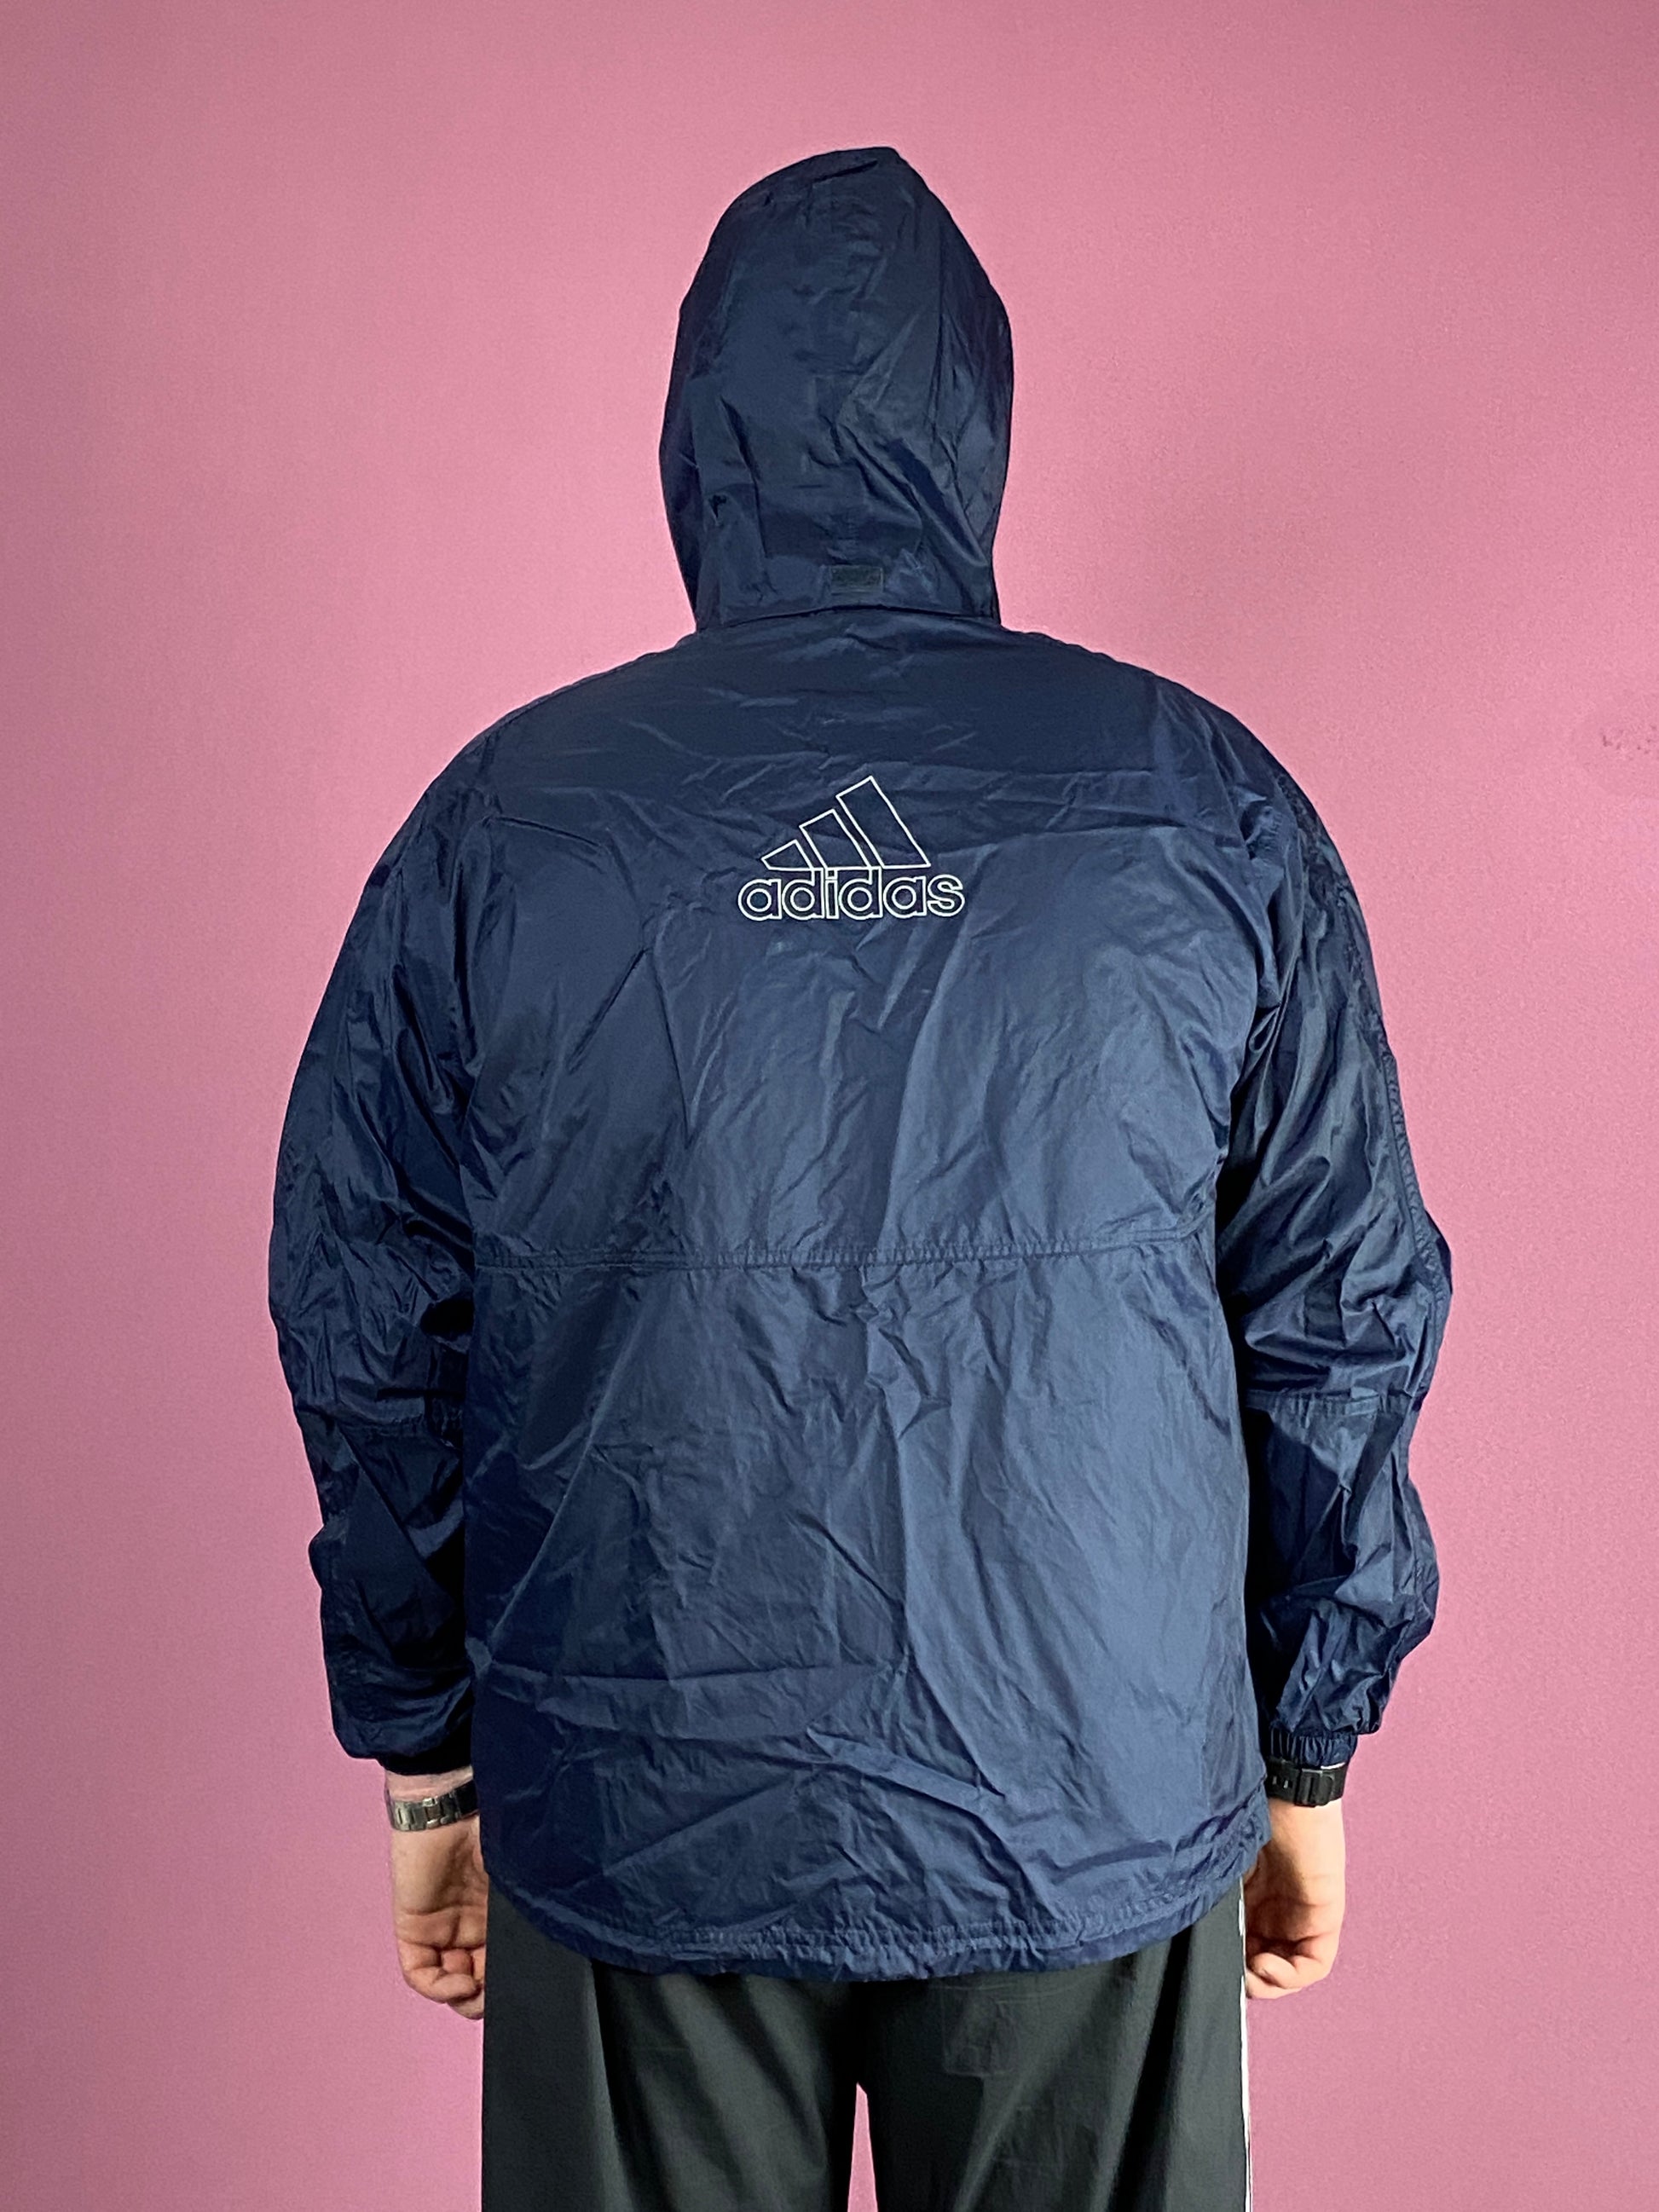 Adidas Vintage Men's Rain Jacket - Large Navy Blue Nylon